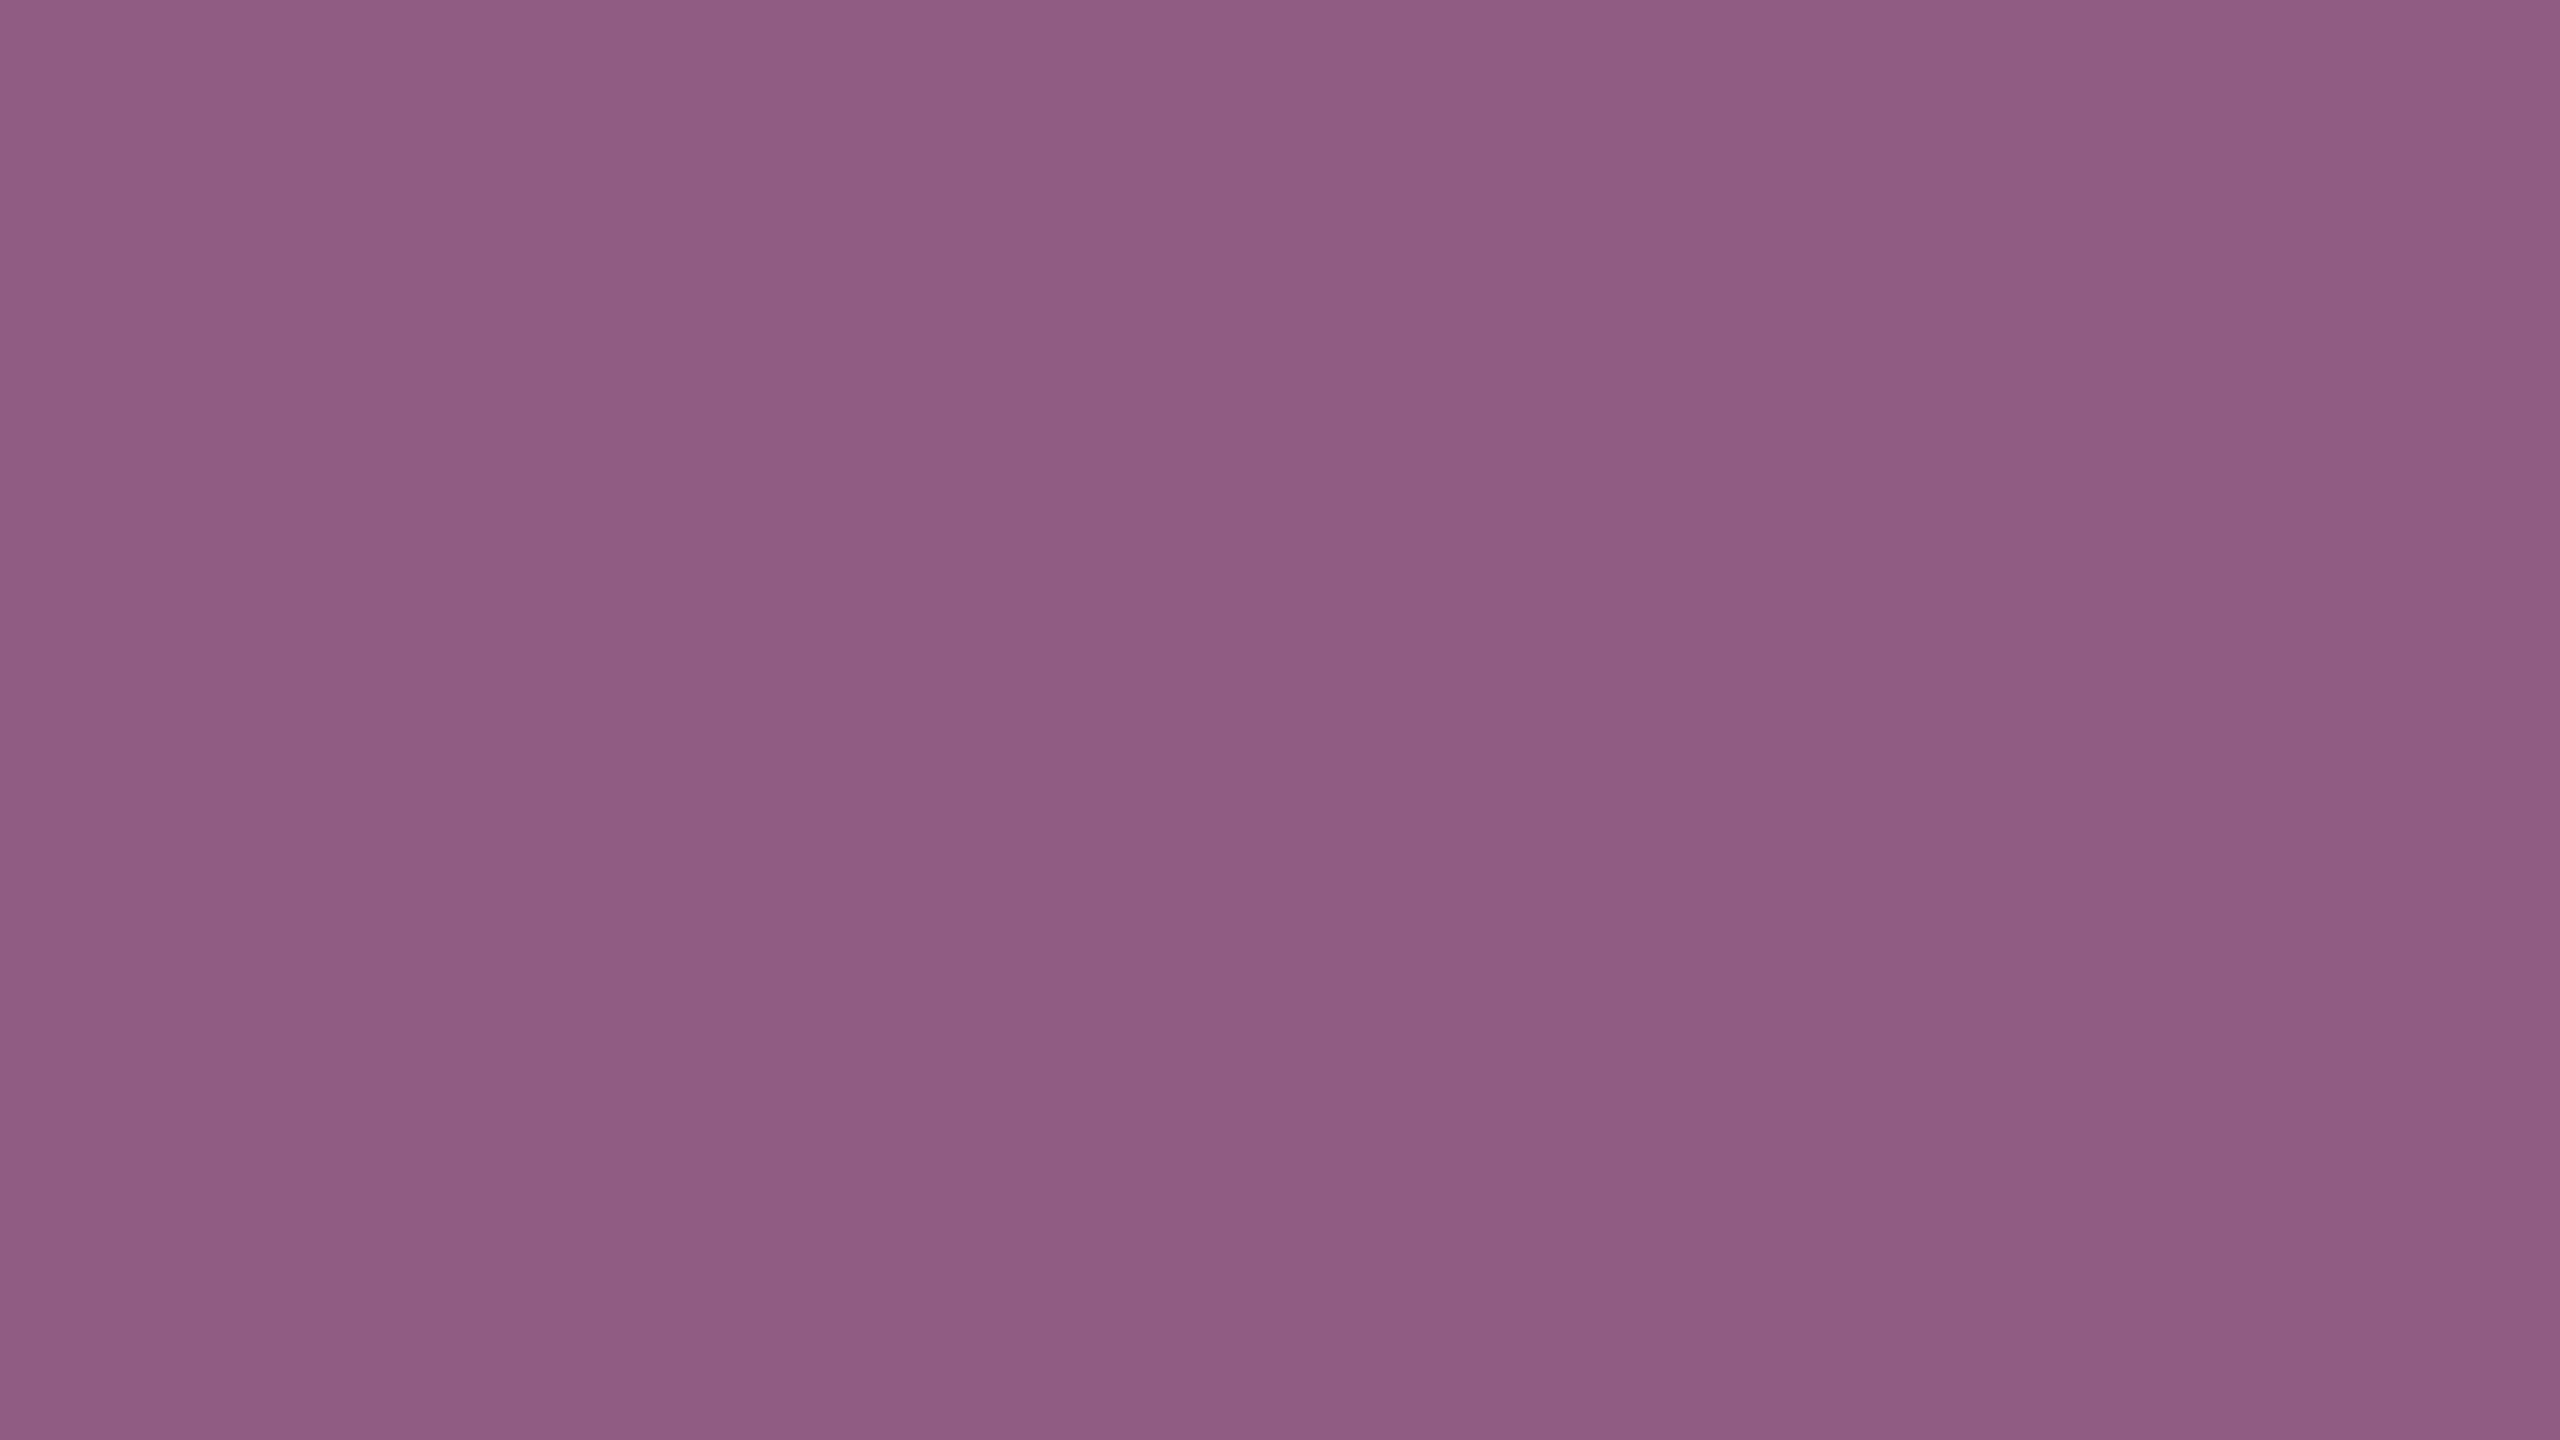 2560x1440 Antique Fuchsia Solid Color Background